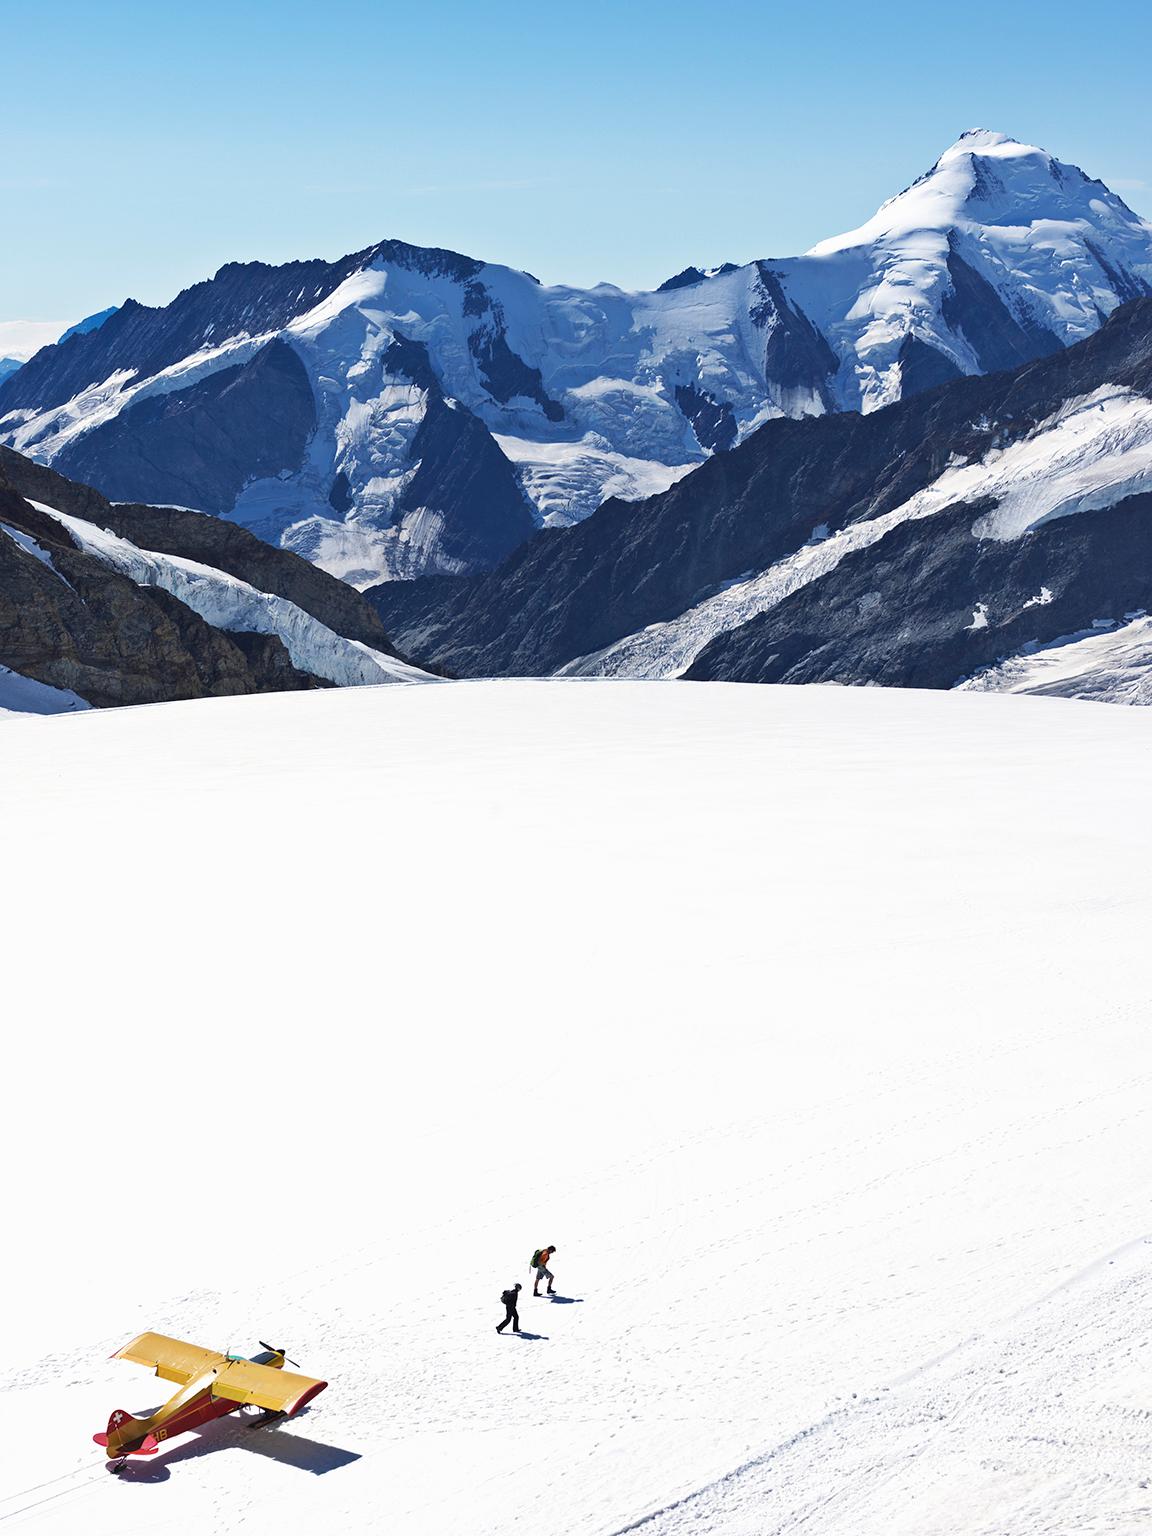  Cosmo Condina Color Photograph - Switzerland Jungfraujoch - Top of Europe